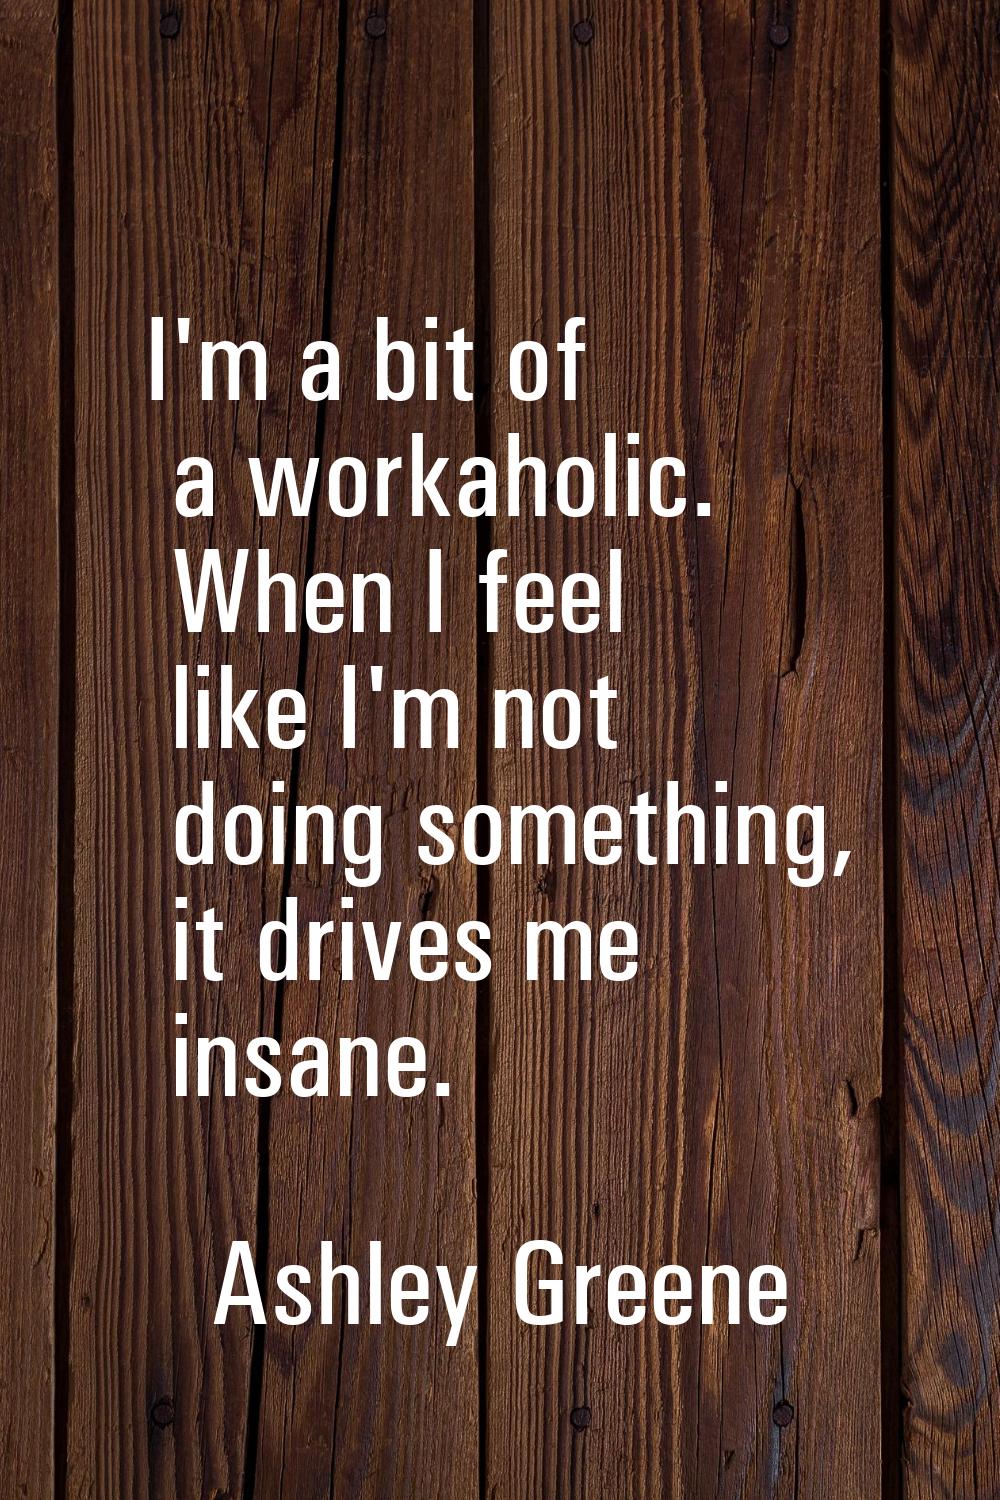 I'm a bit of a workaholic. When I feel like I'm not doing something, it drives me insane.